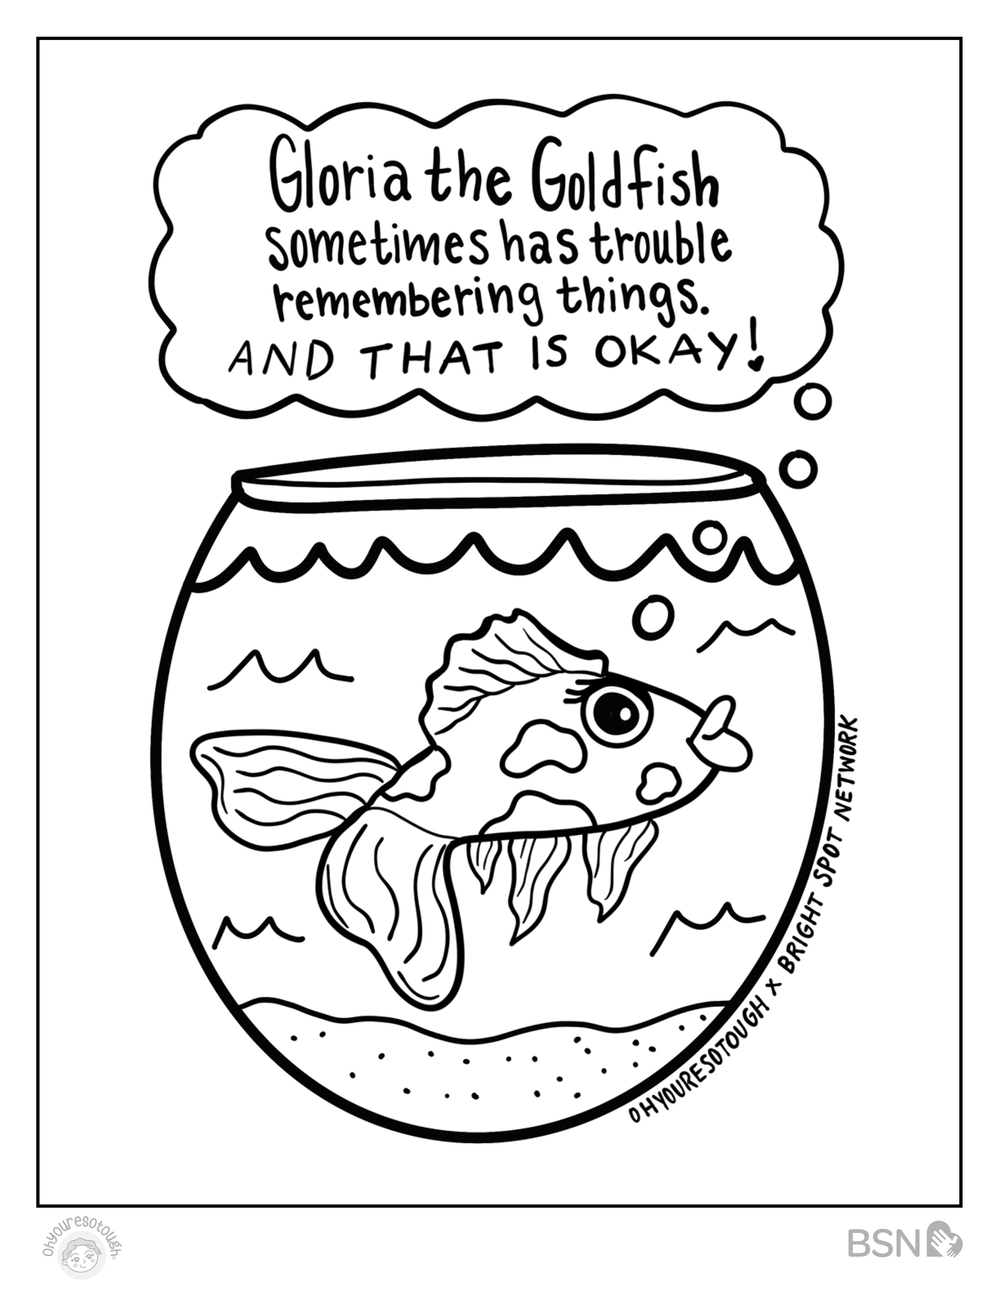 Gloria the Goldfish